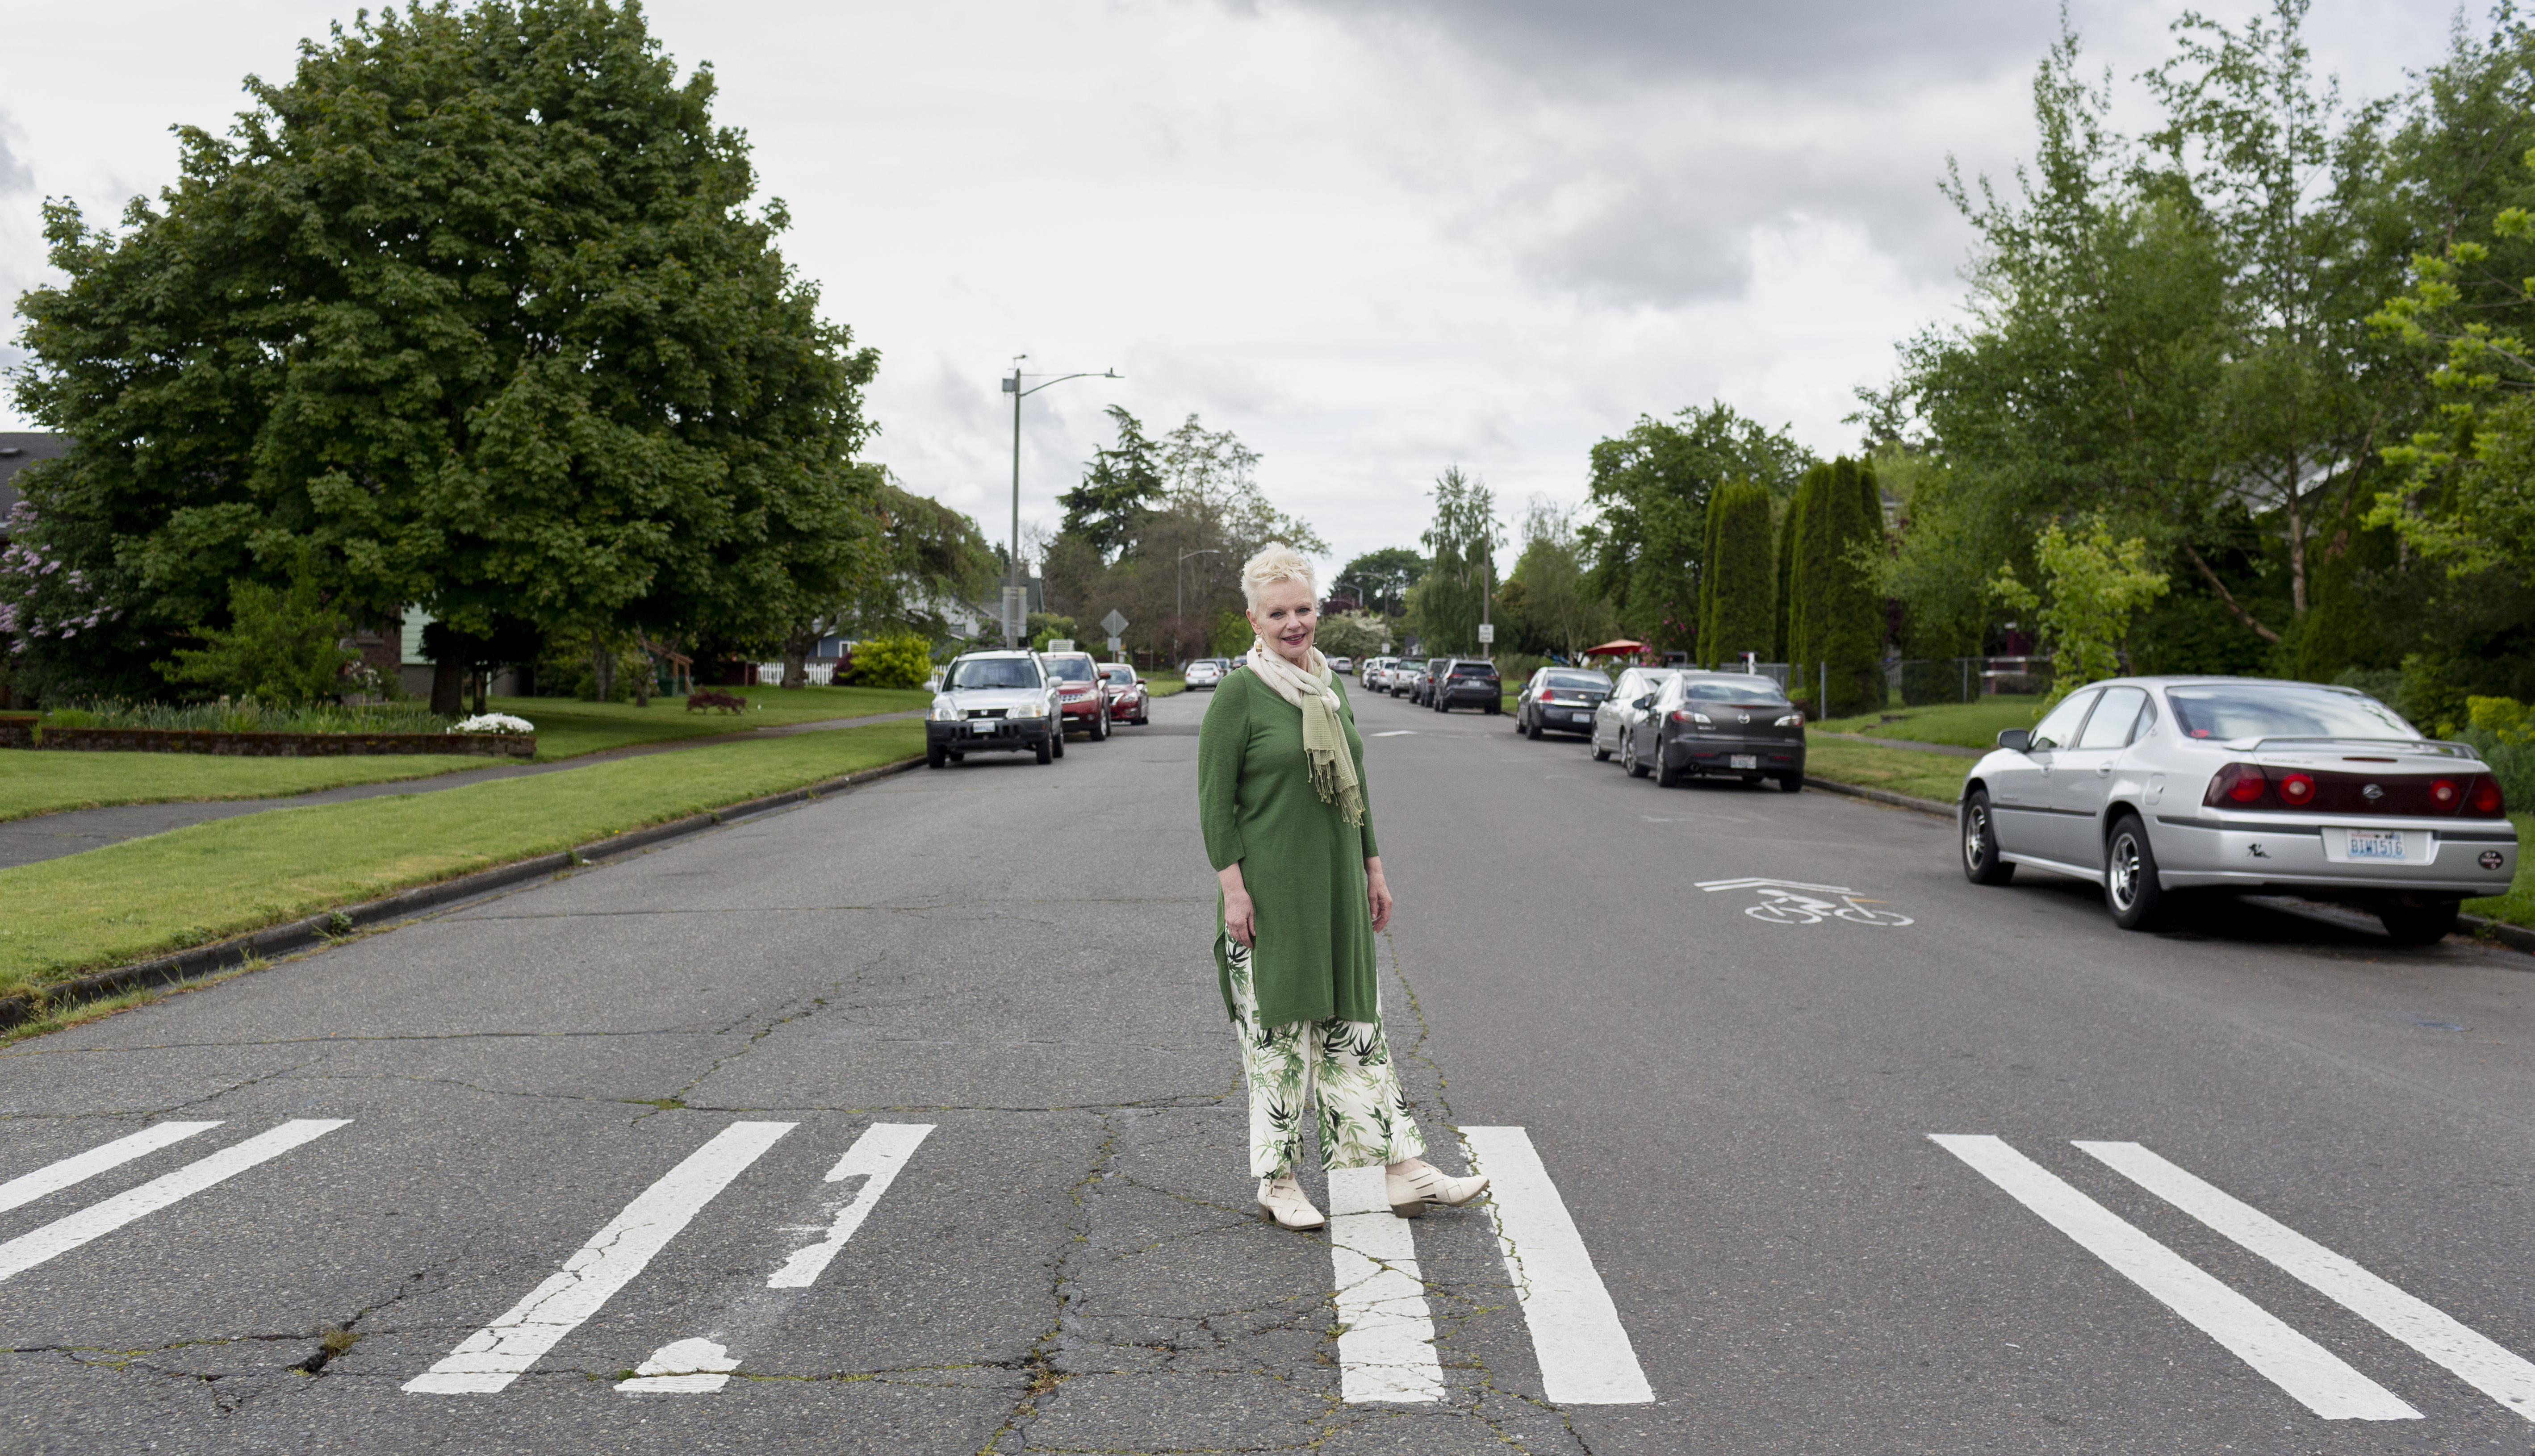 An older woman stands in a crosswalk